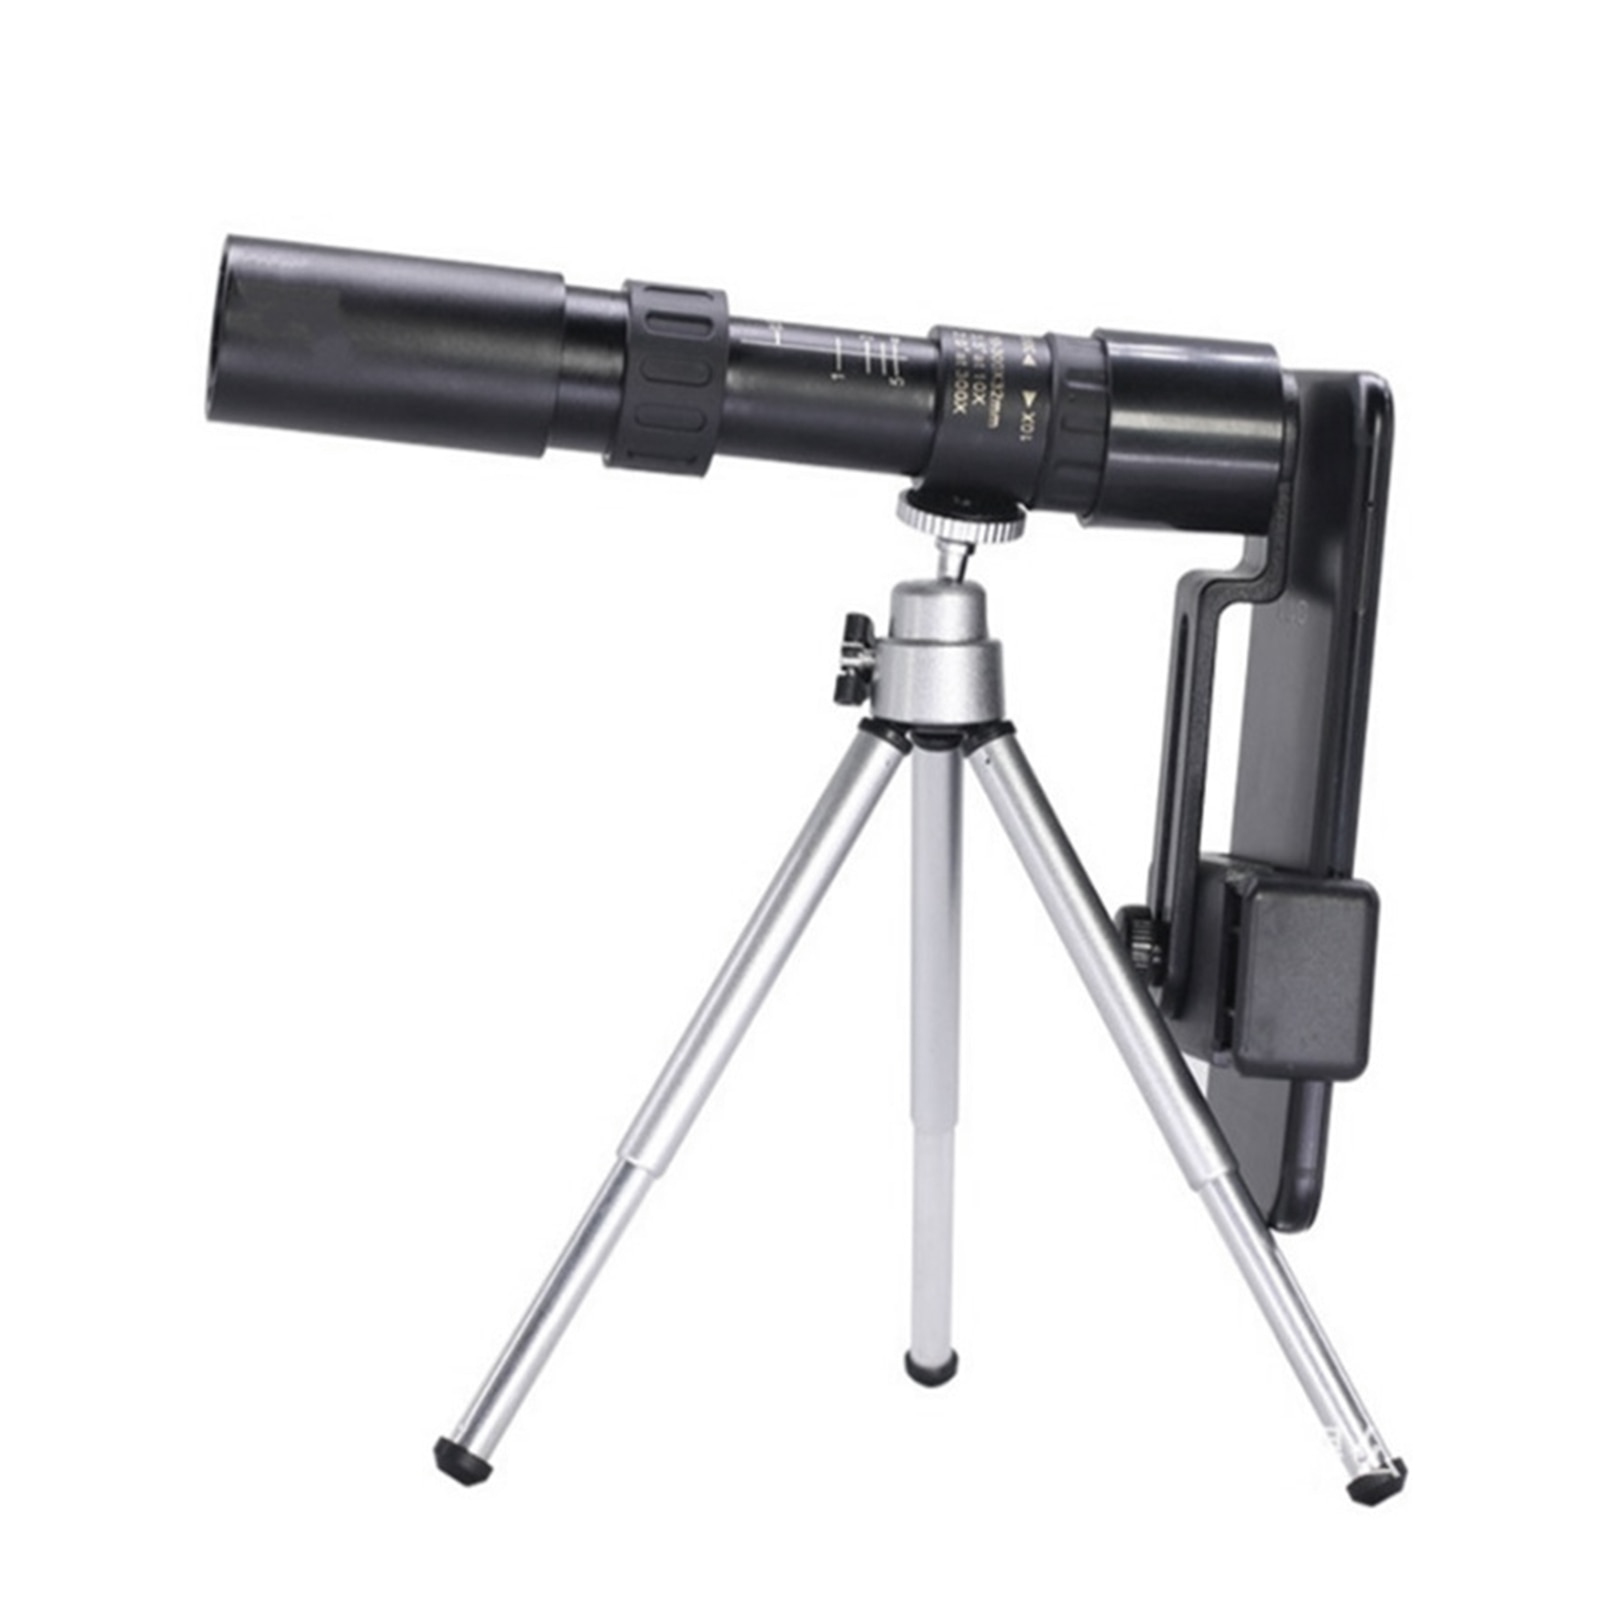 10-300x40 Powerful Monocular Telescope BQK4 Prism Travel Professional Outdoor Camping Bird Watching HD Zoom Kids Adults Metal